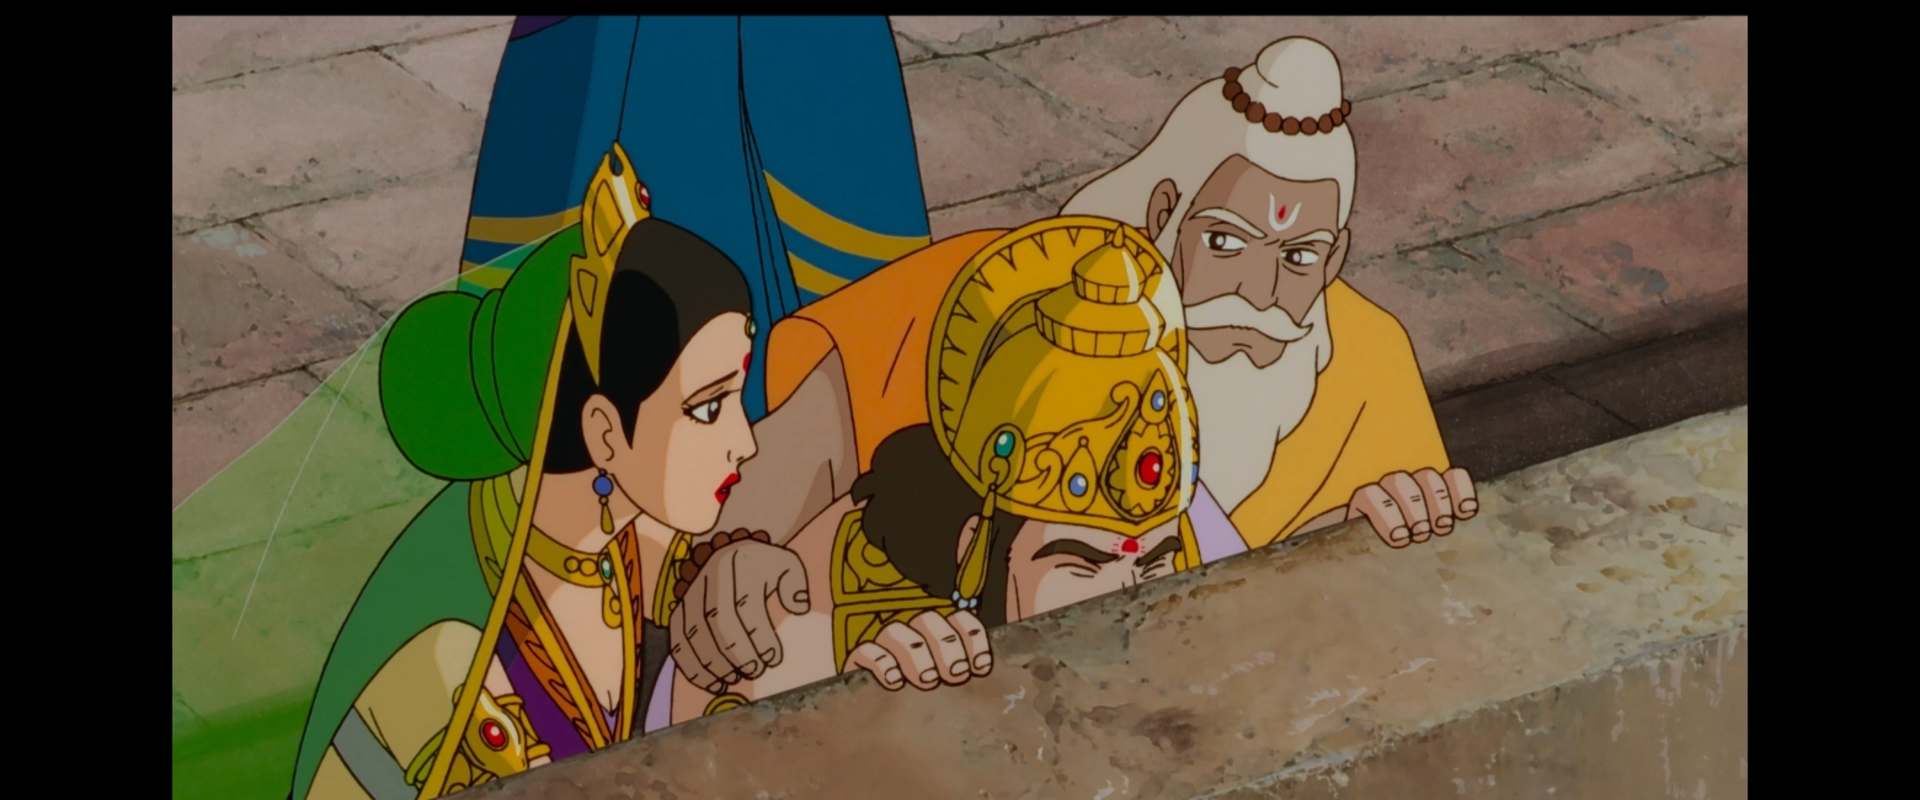 Watch Ramayana: The Legend of Prince Rama on Netflix Today! |  